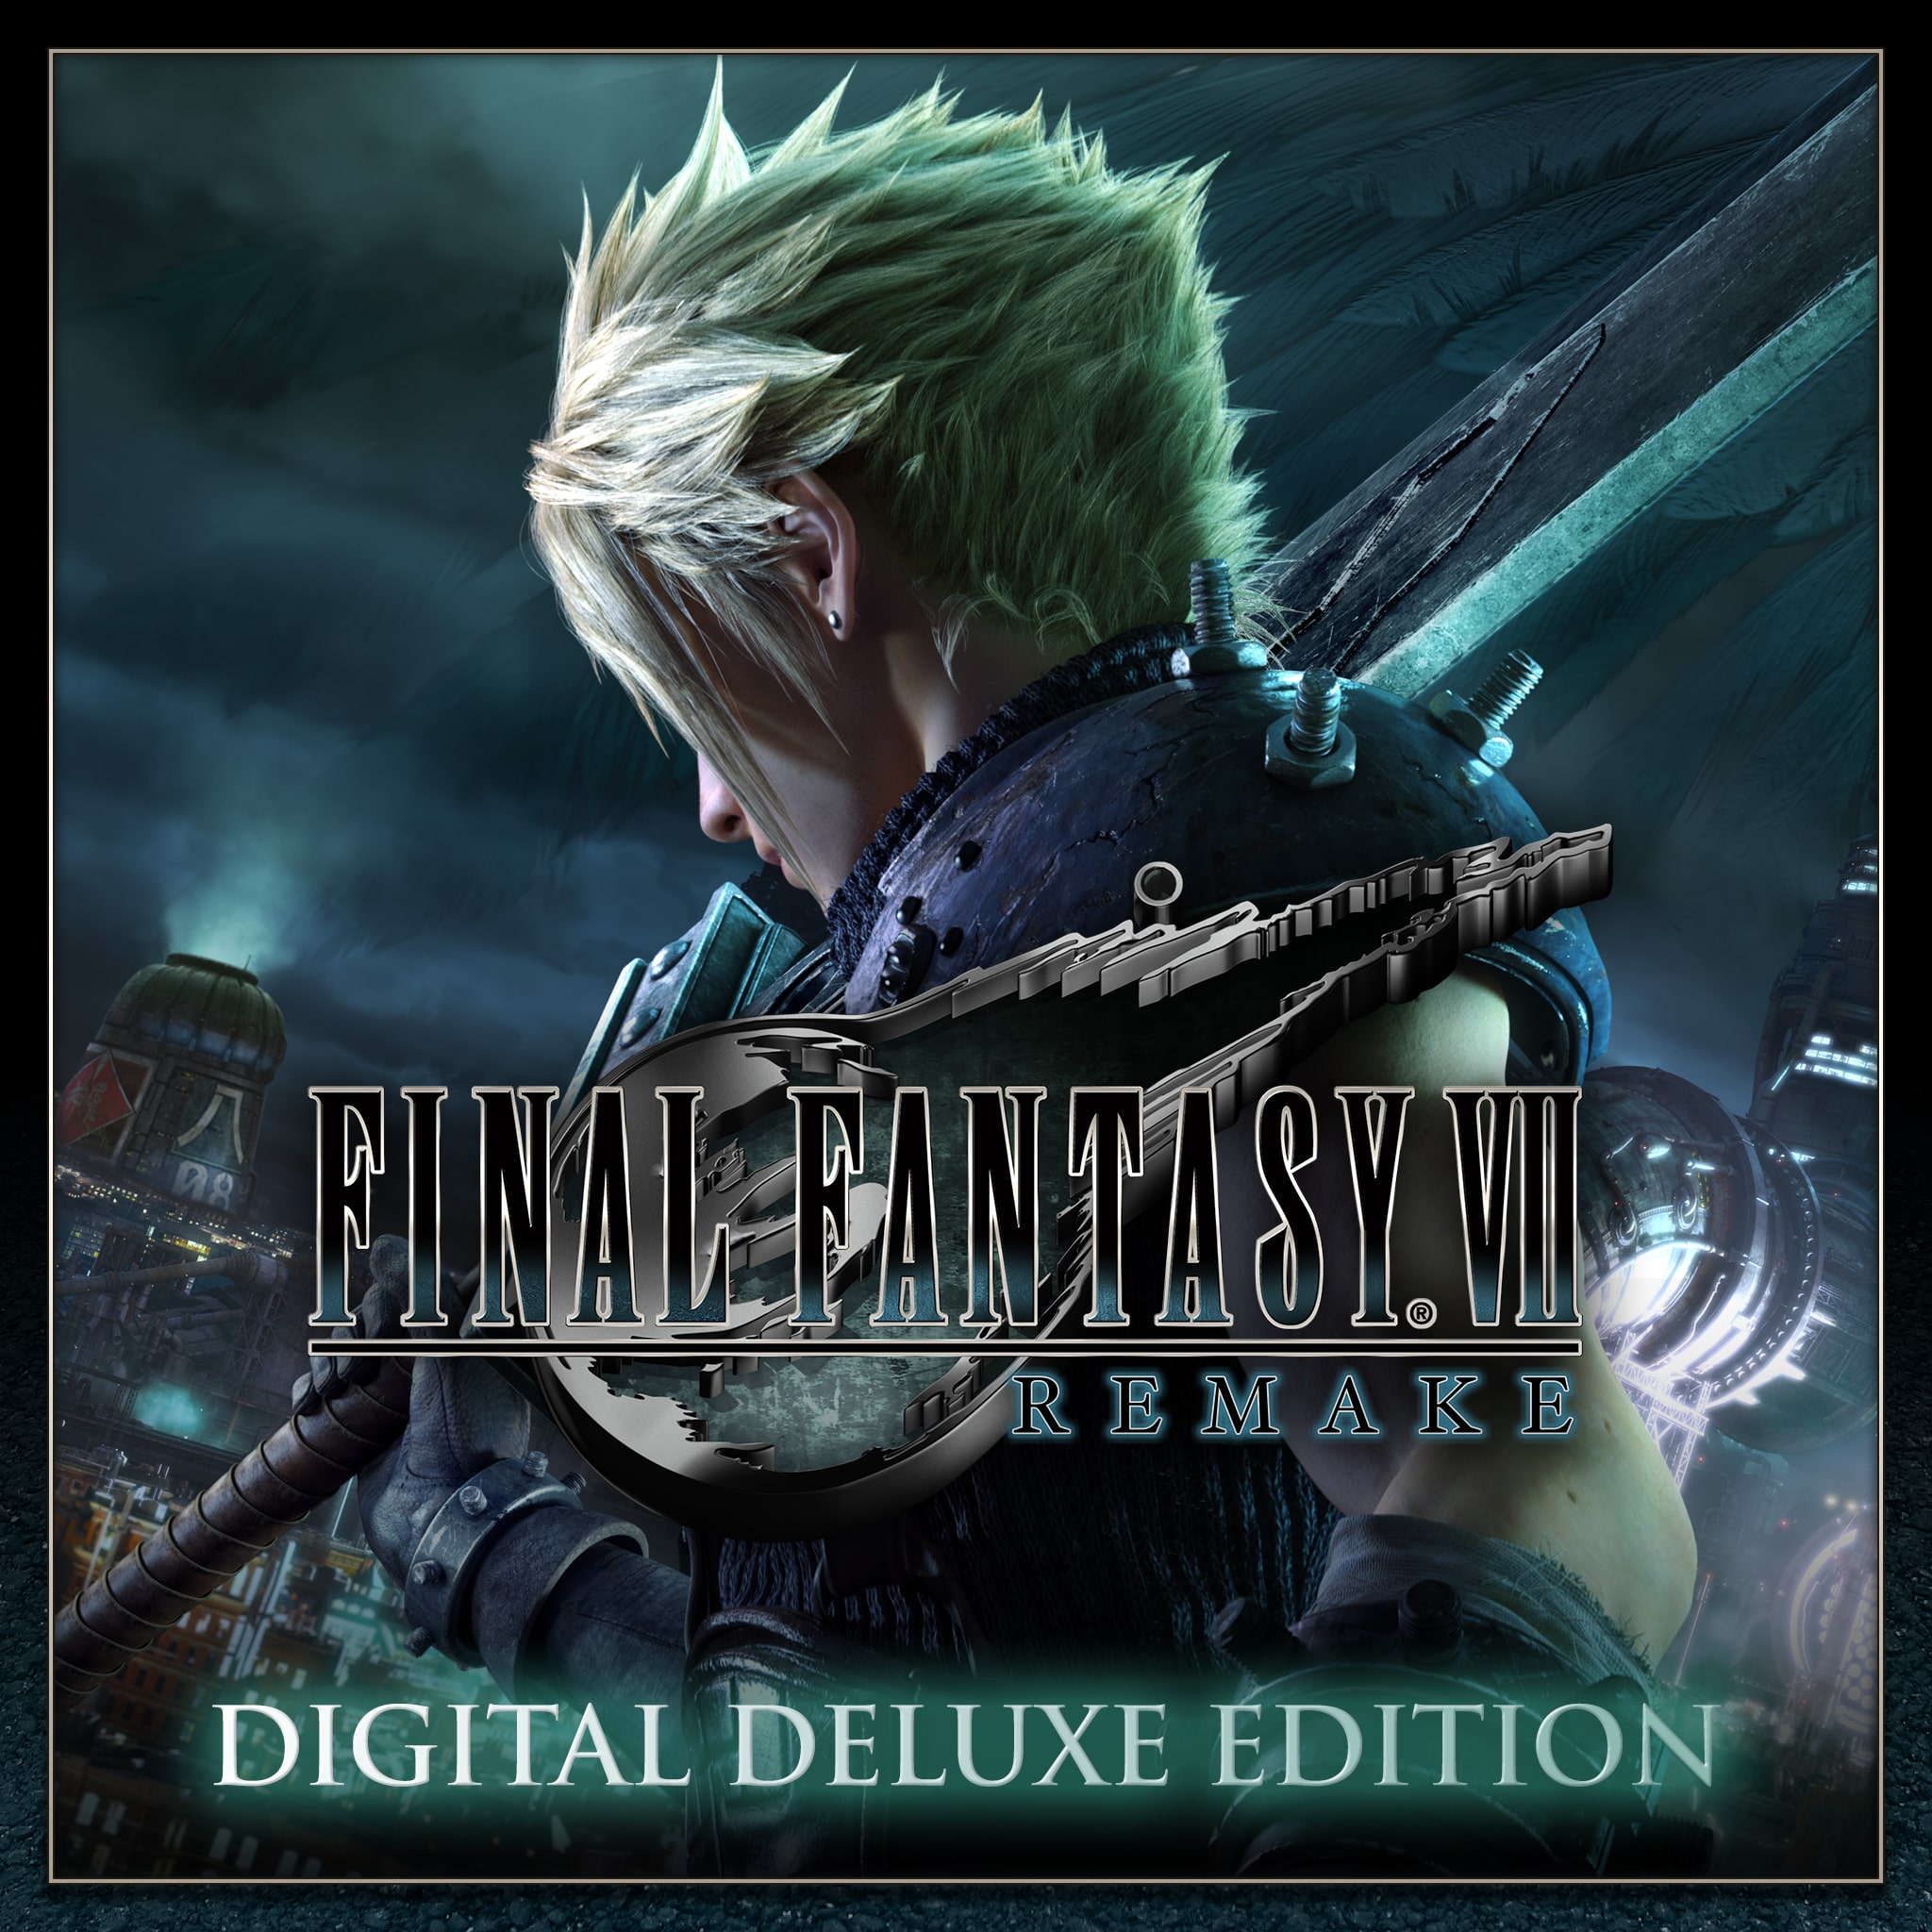 FINAL FANTASY VII REMAKE Digital Deluxe Edition